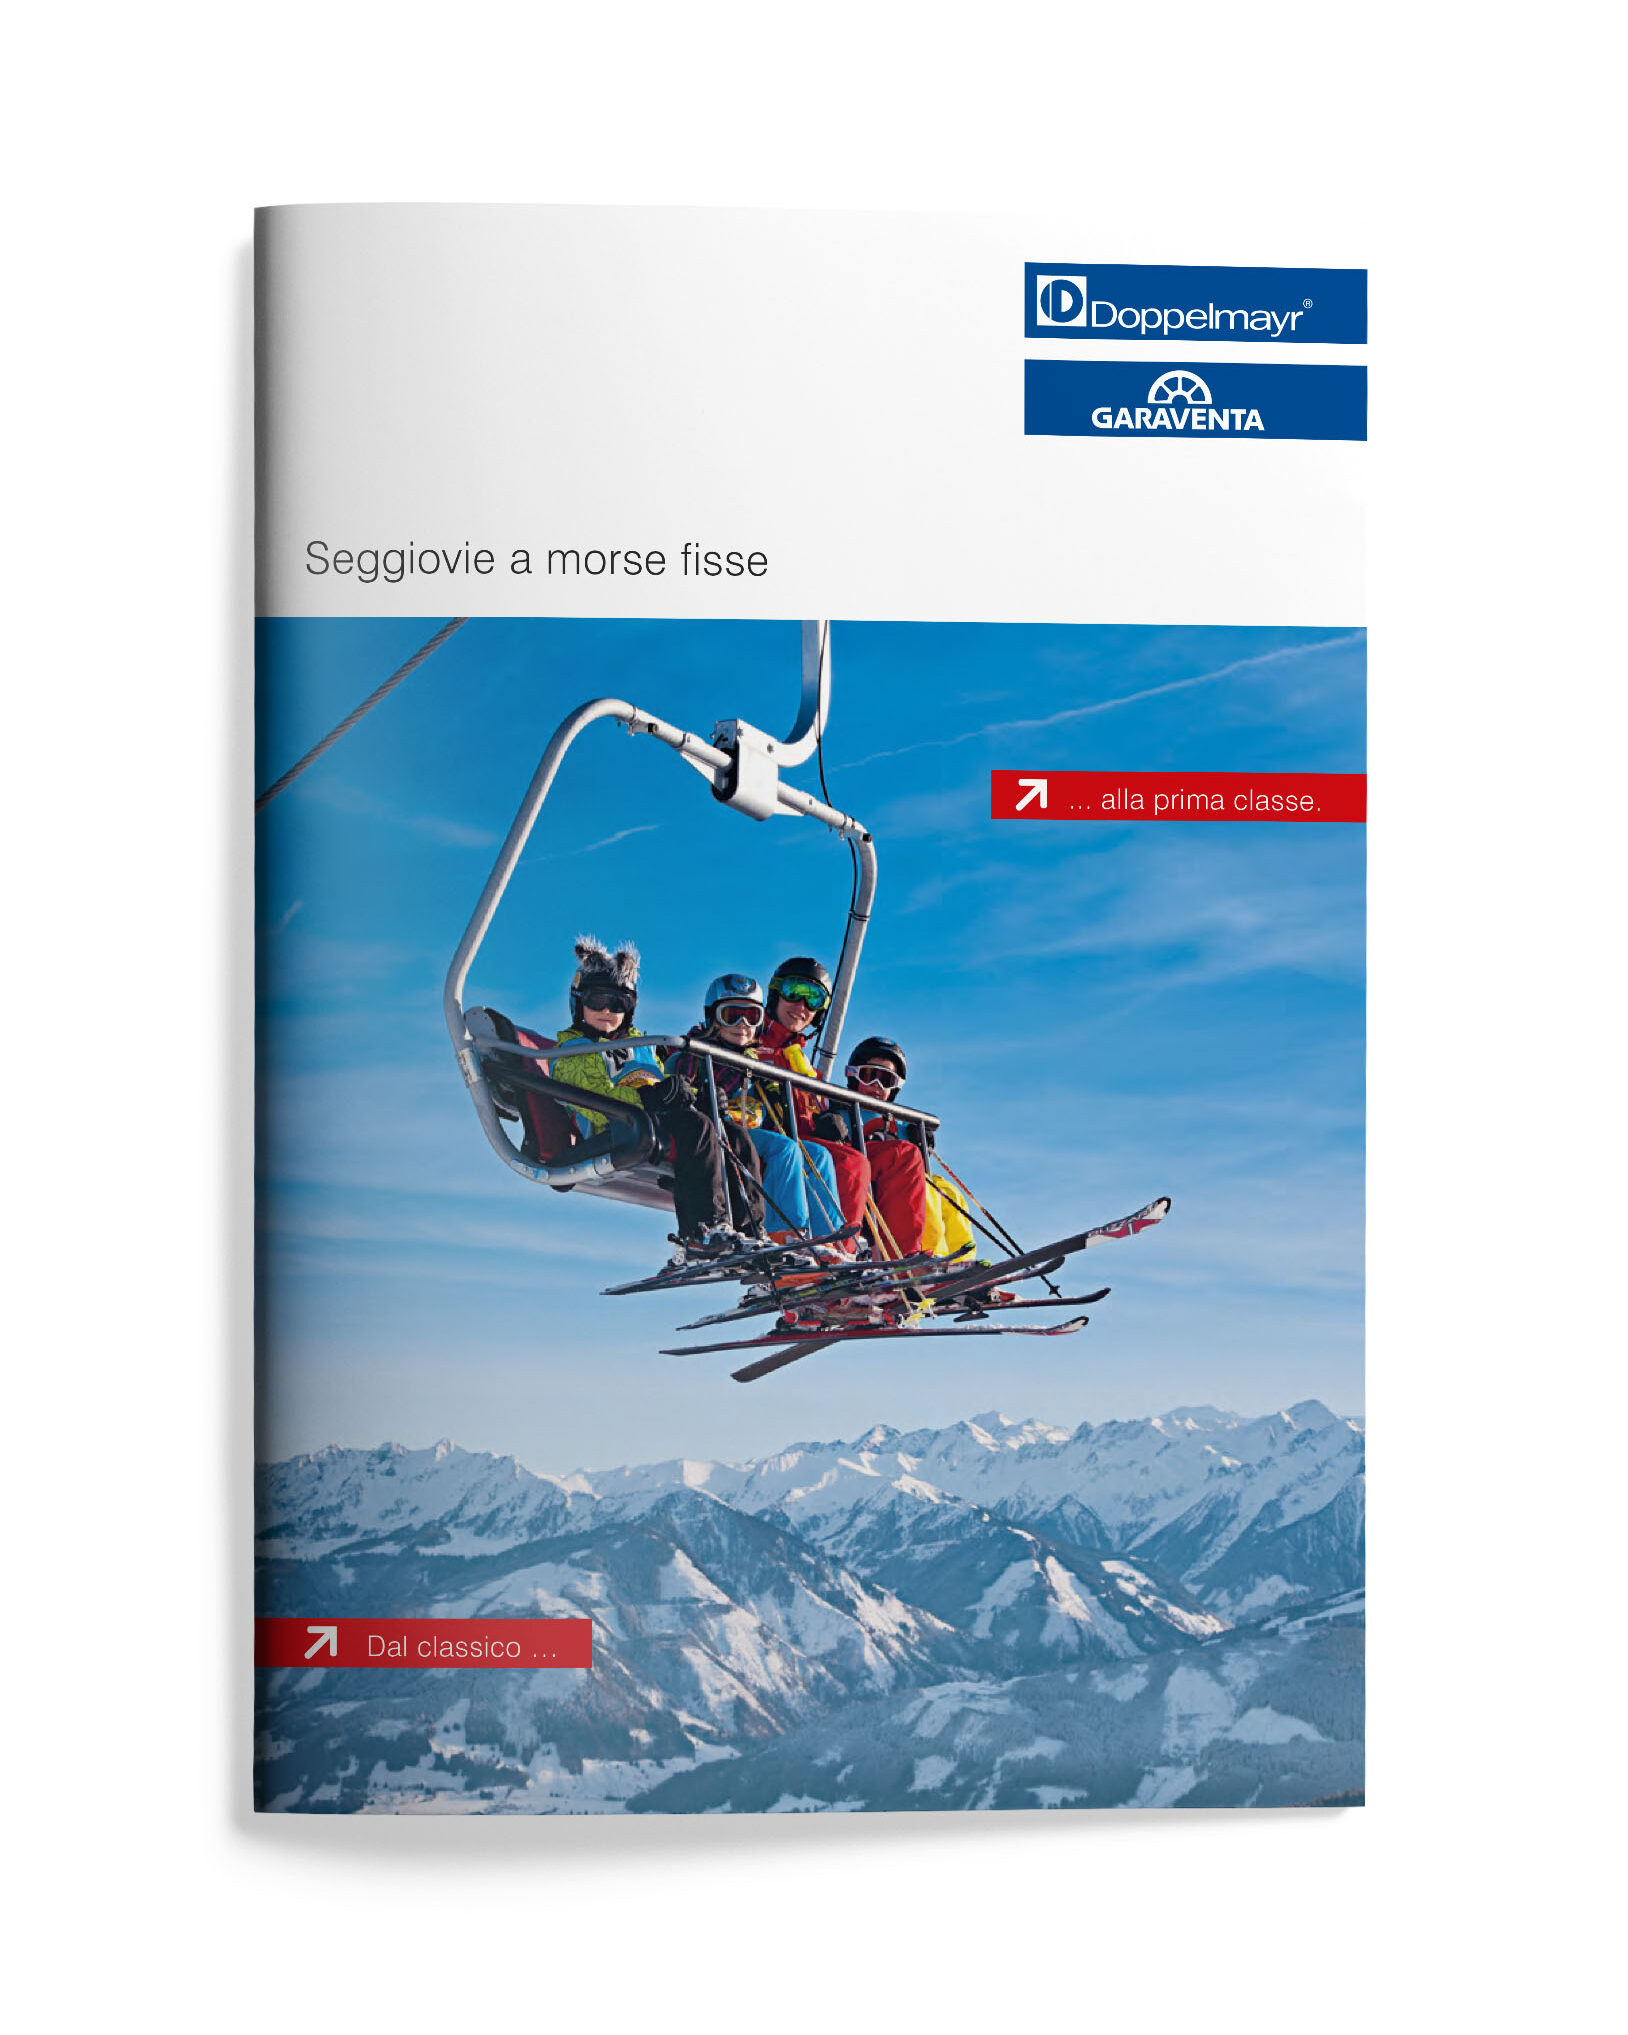 Brochure/Seggiovie a morsa fissa - Doppelmayr Gruppo